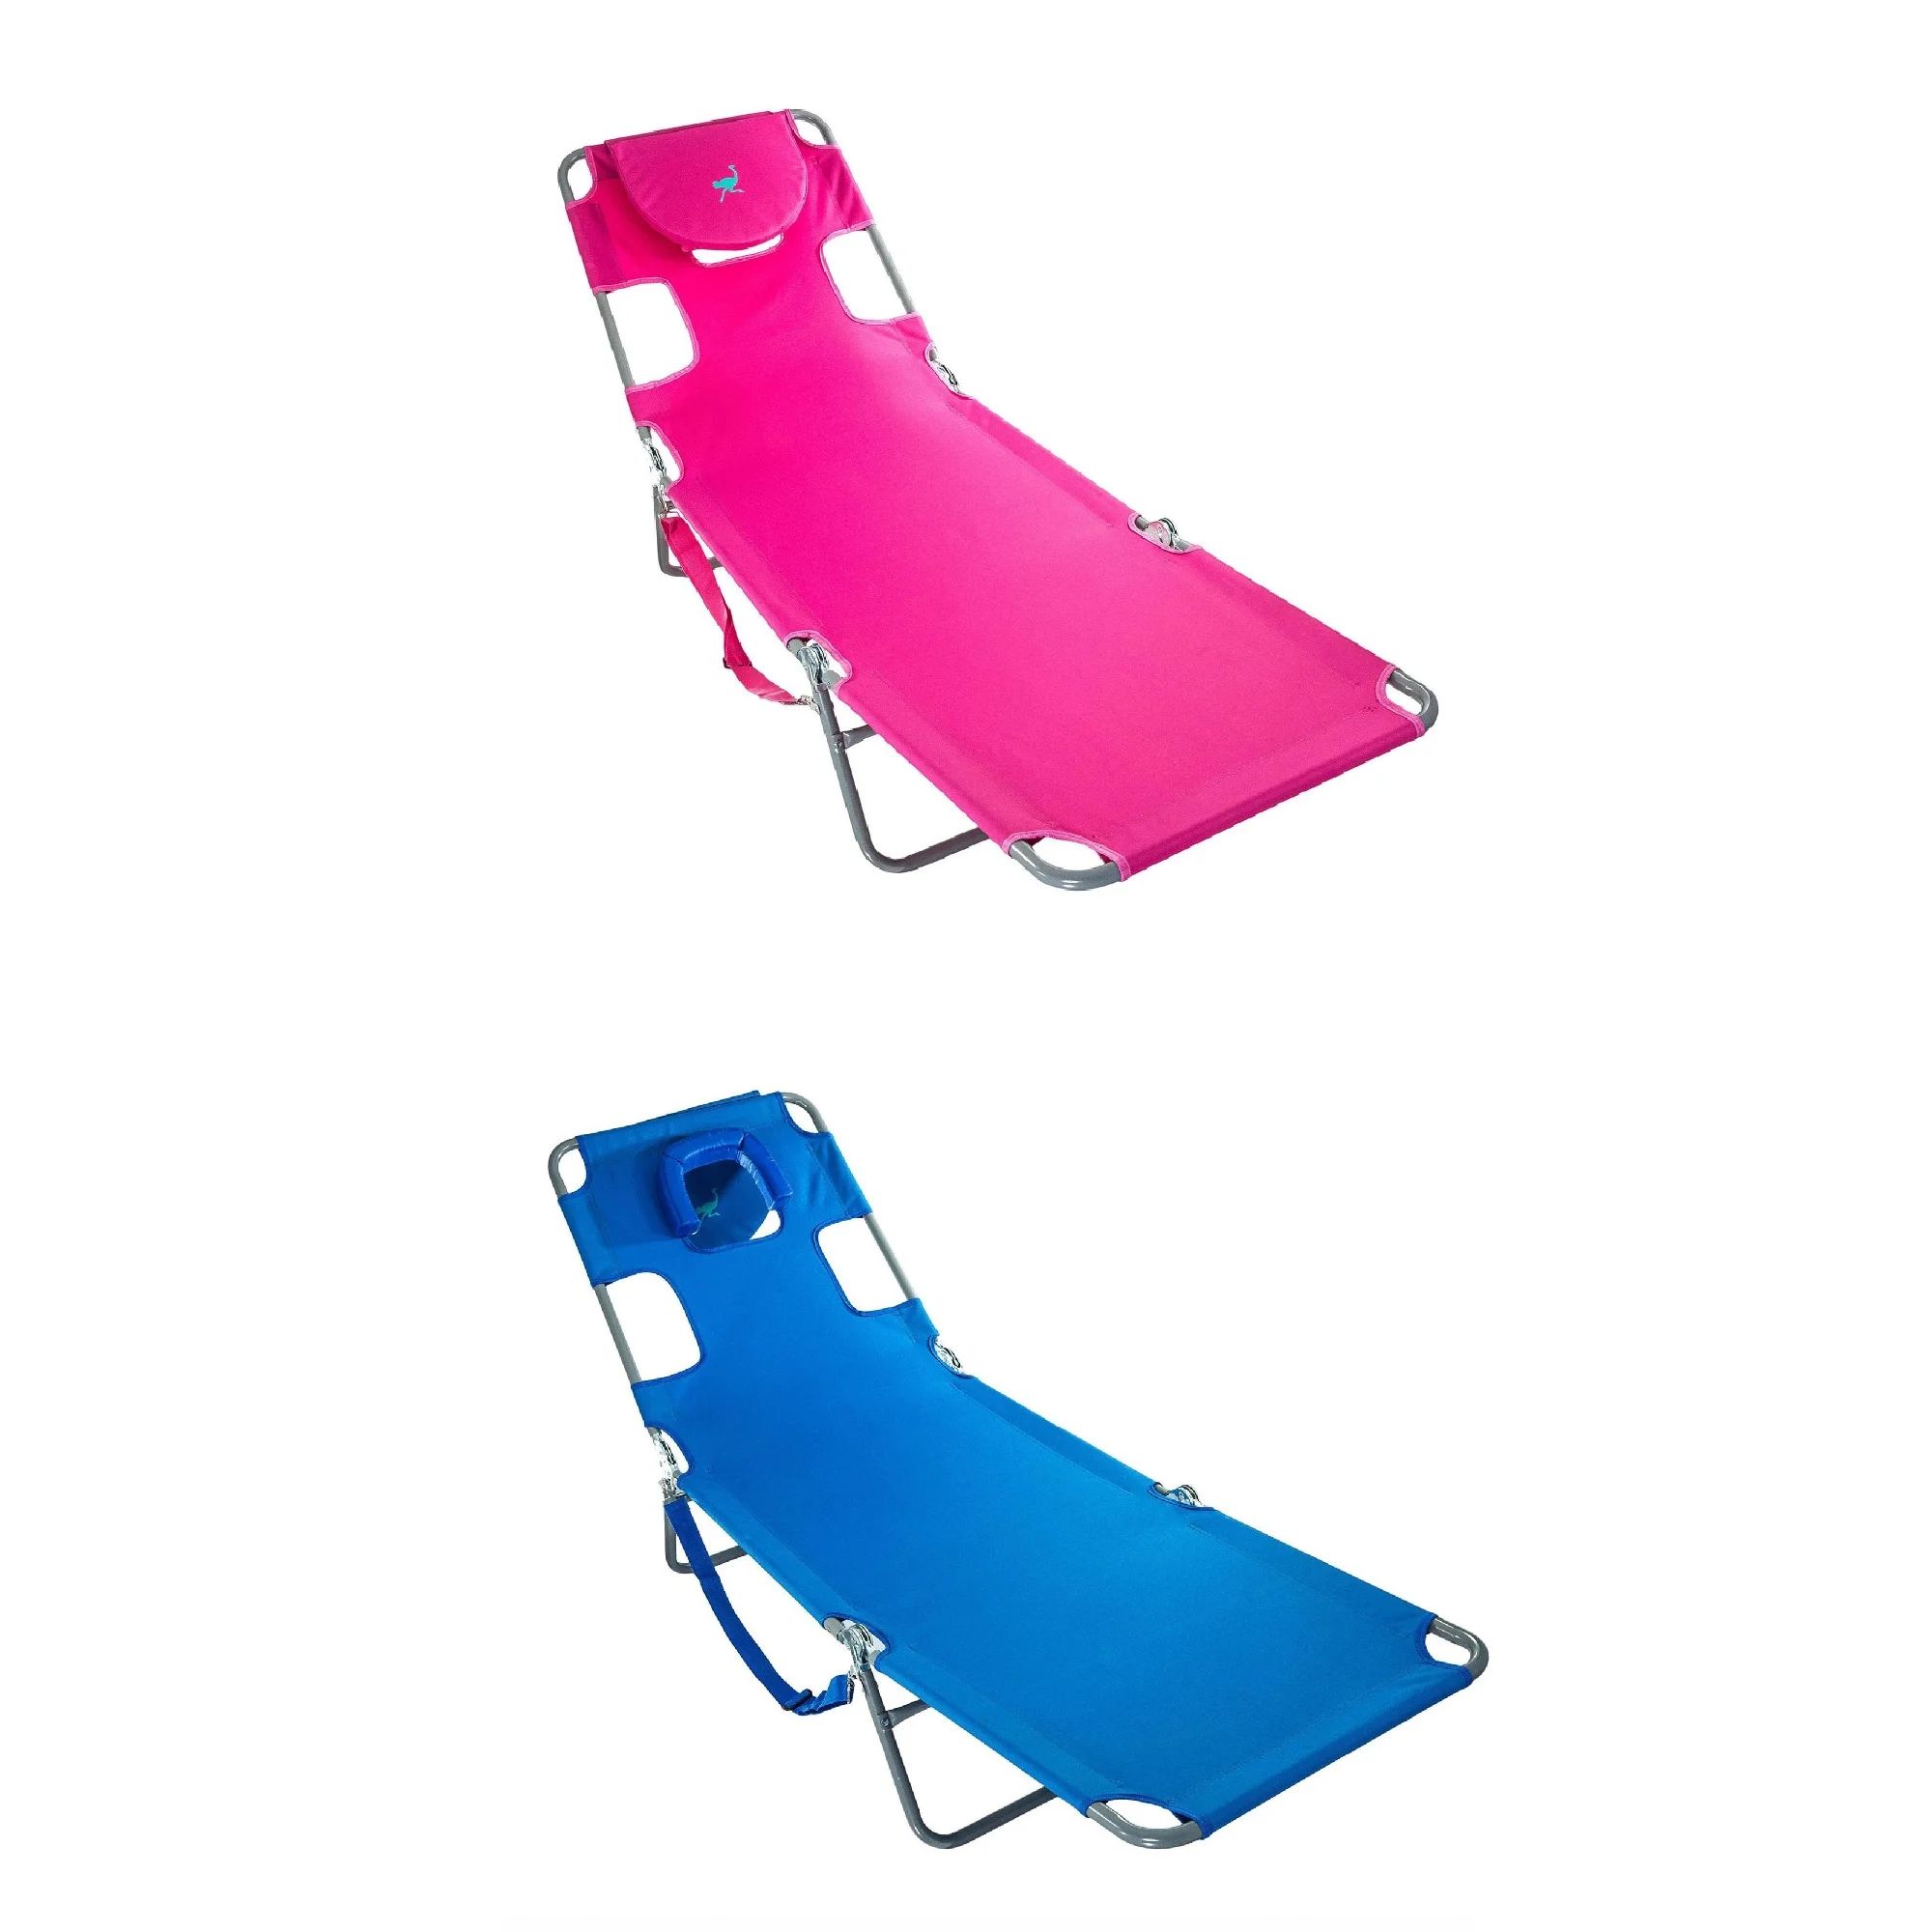 Ostrich Chaise Lounge Folding Sunbathing Poolside Beach Chair, Pink & Blue | Walmart (US)